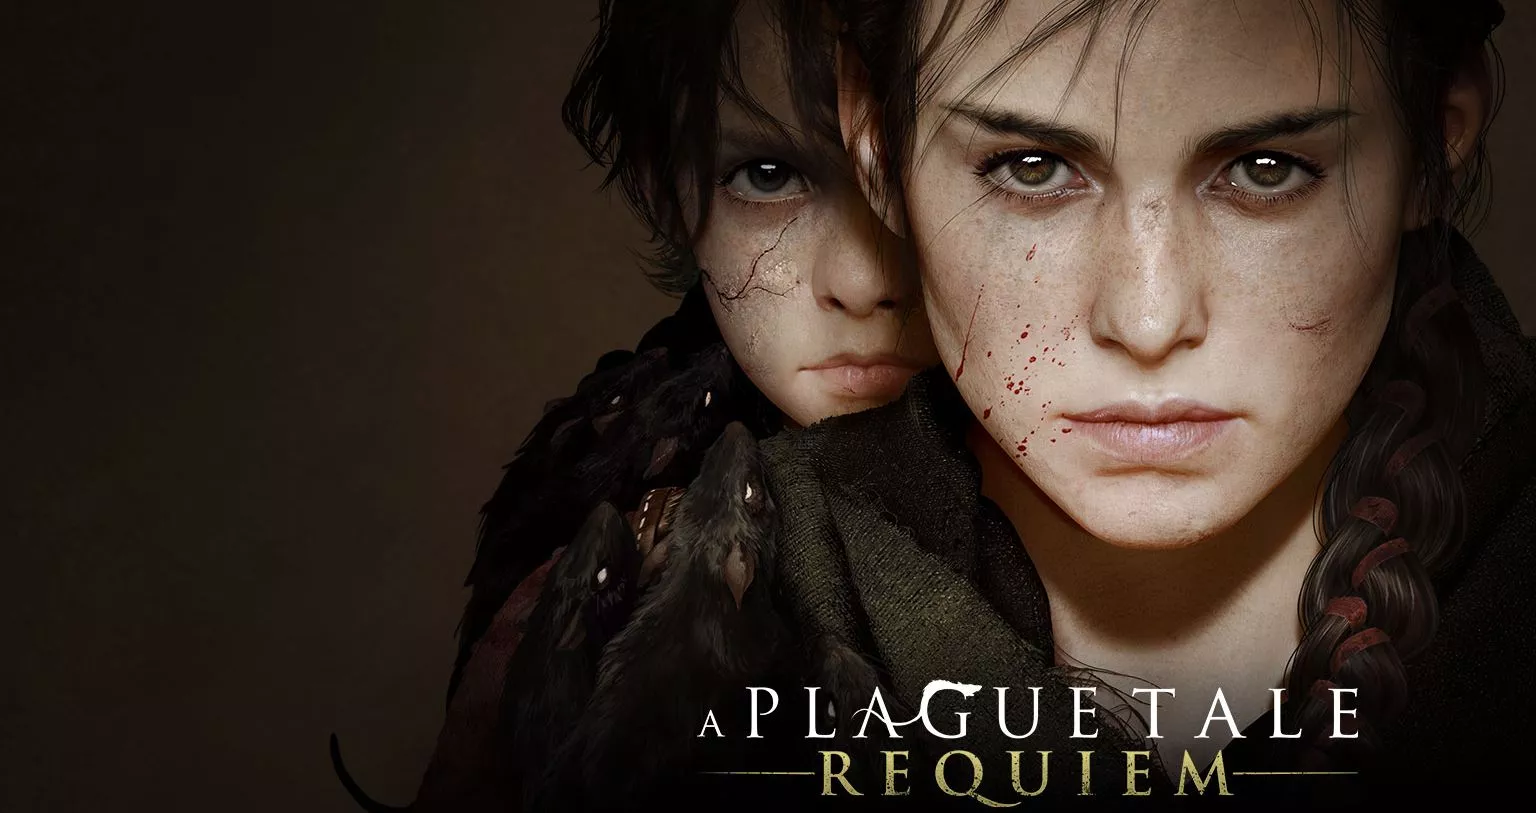 A Plague Tale: Requiem - Gameplay Overview Trailer veröffentlicht Heropic